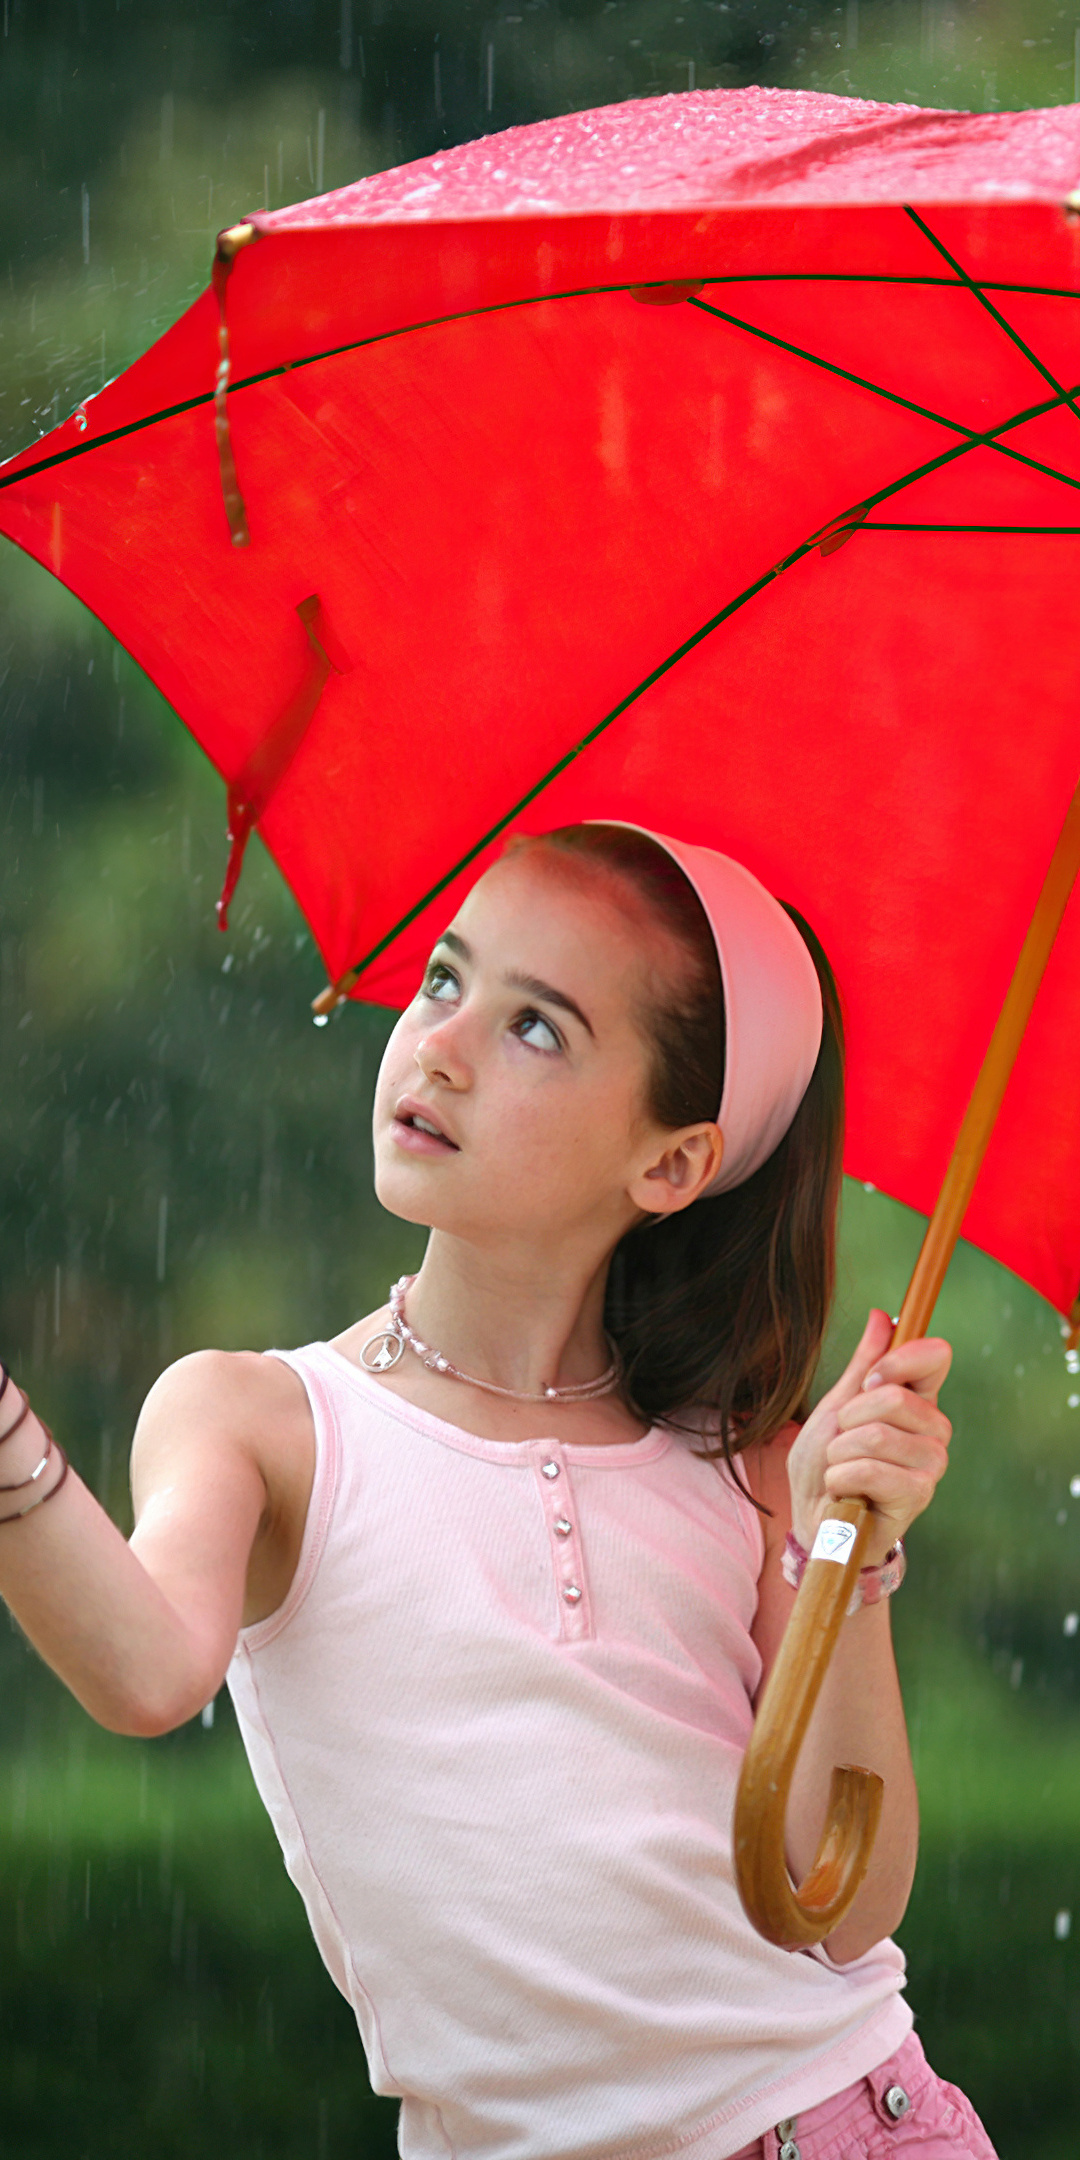 little-girl-in-rain-with-umbrella-4k-iv.jpg